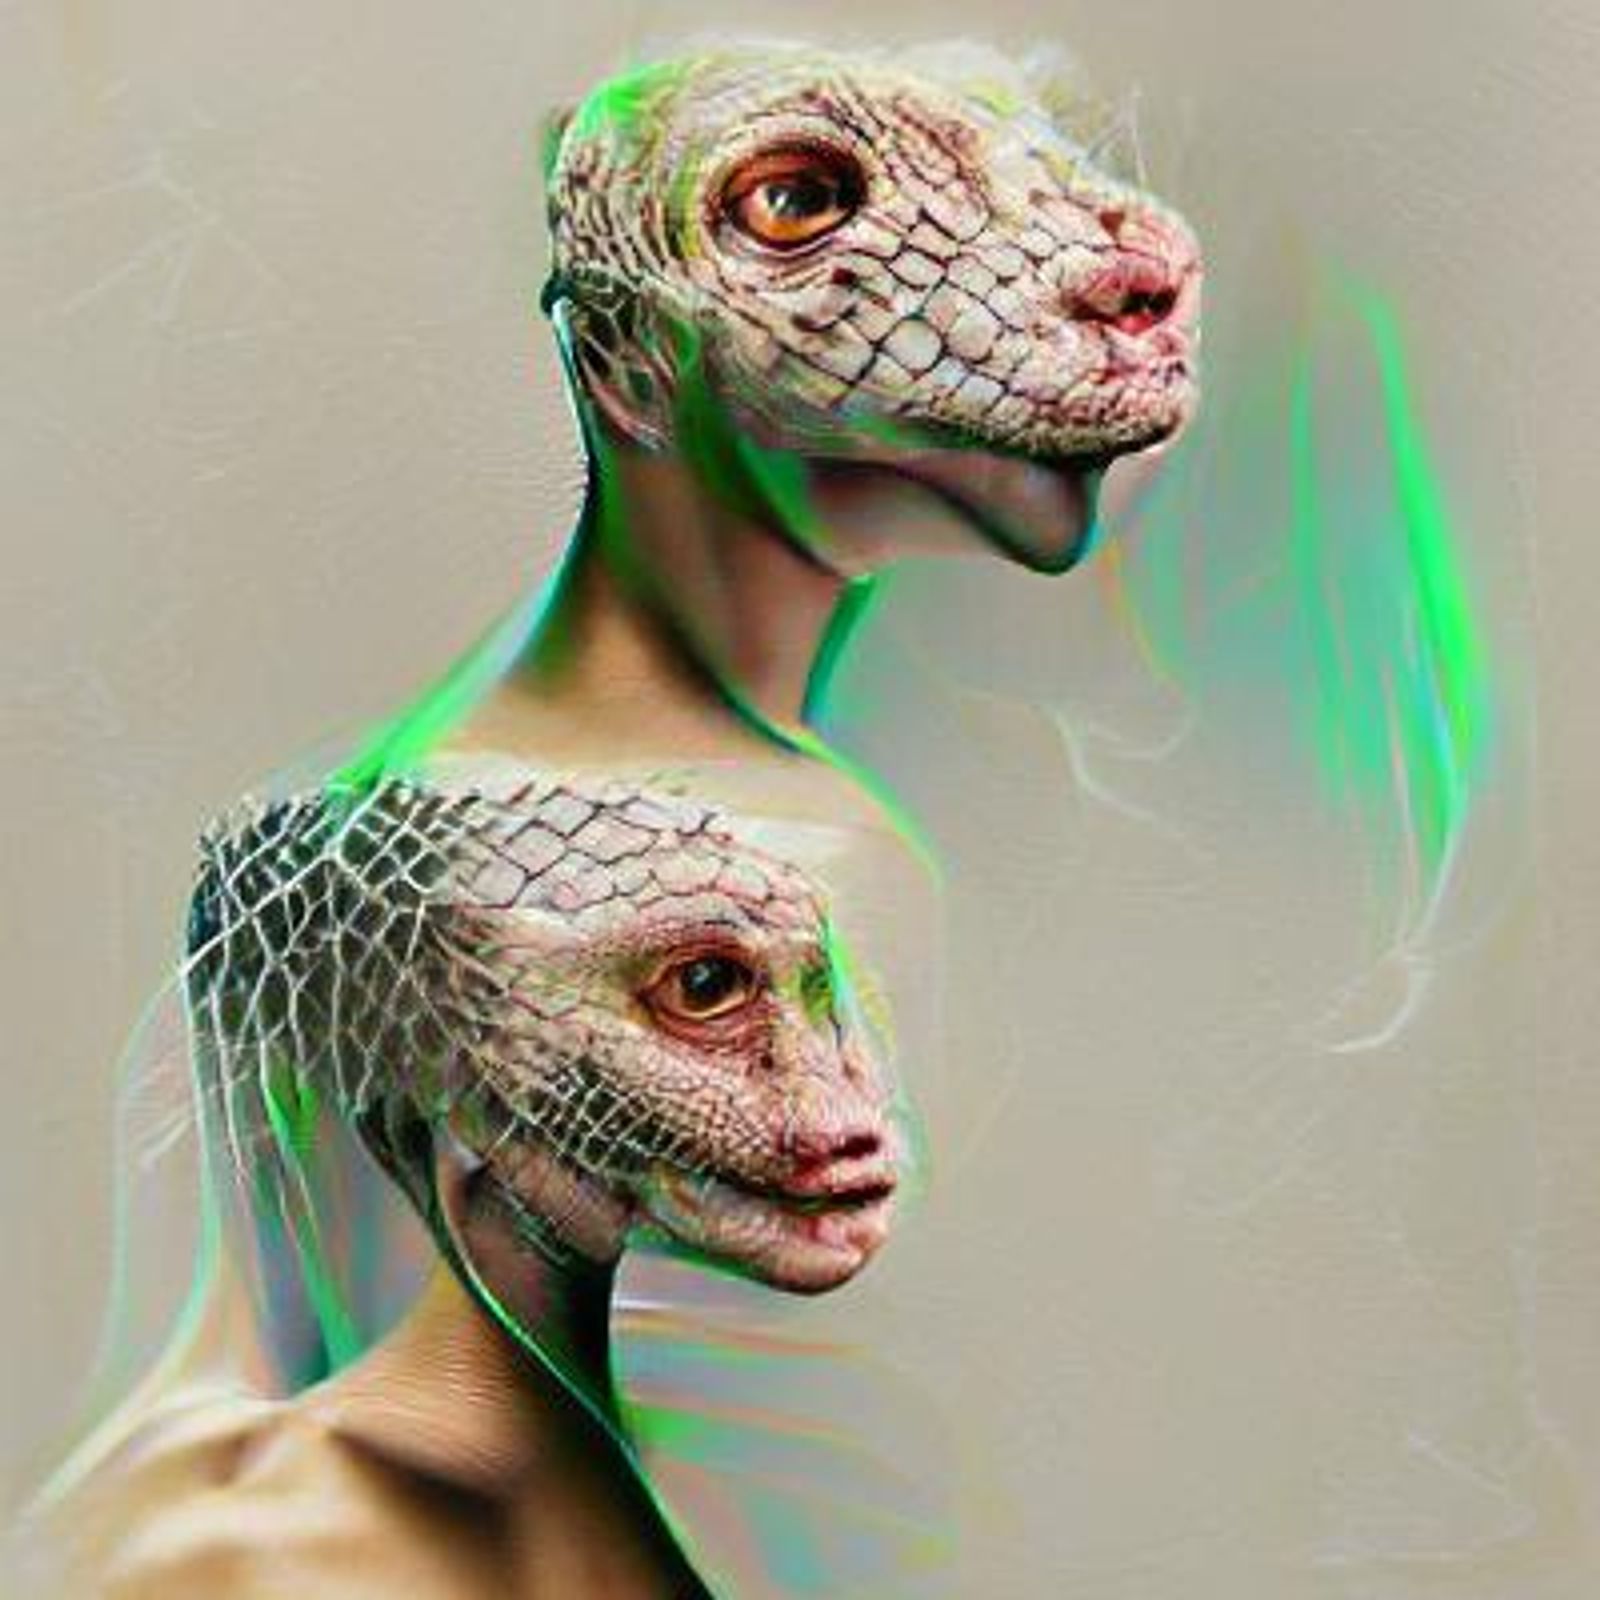 reptilian humanoid